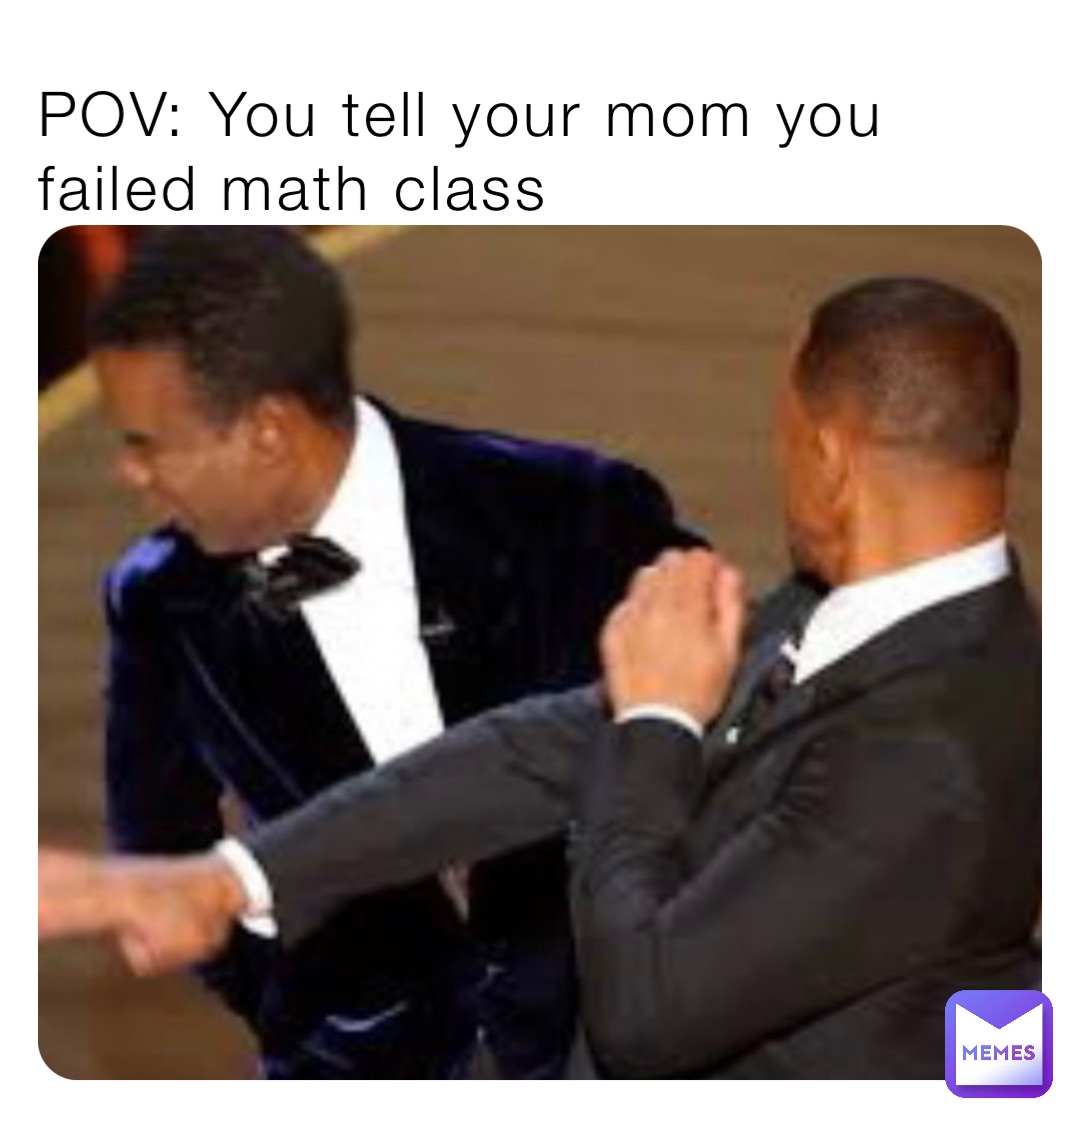 POV: You tell your mom you failed math class